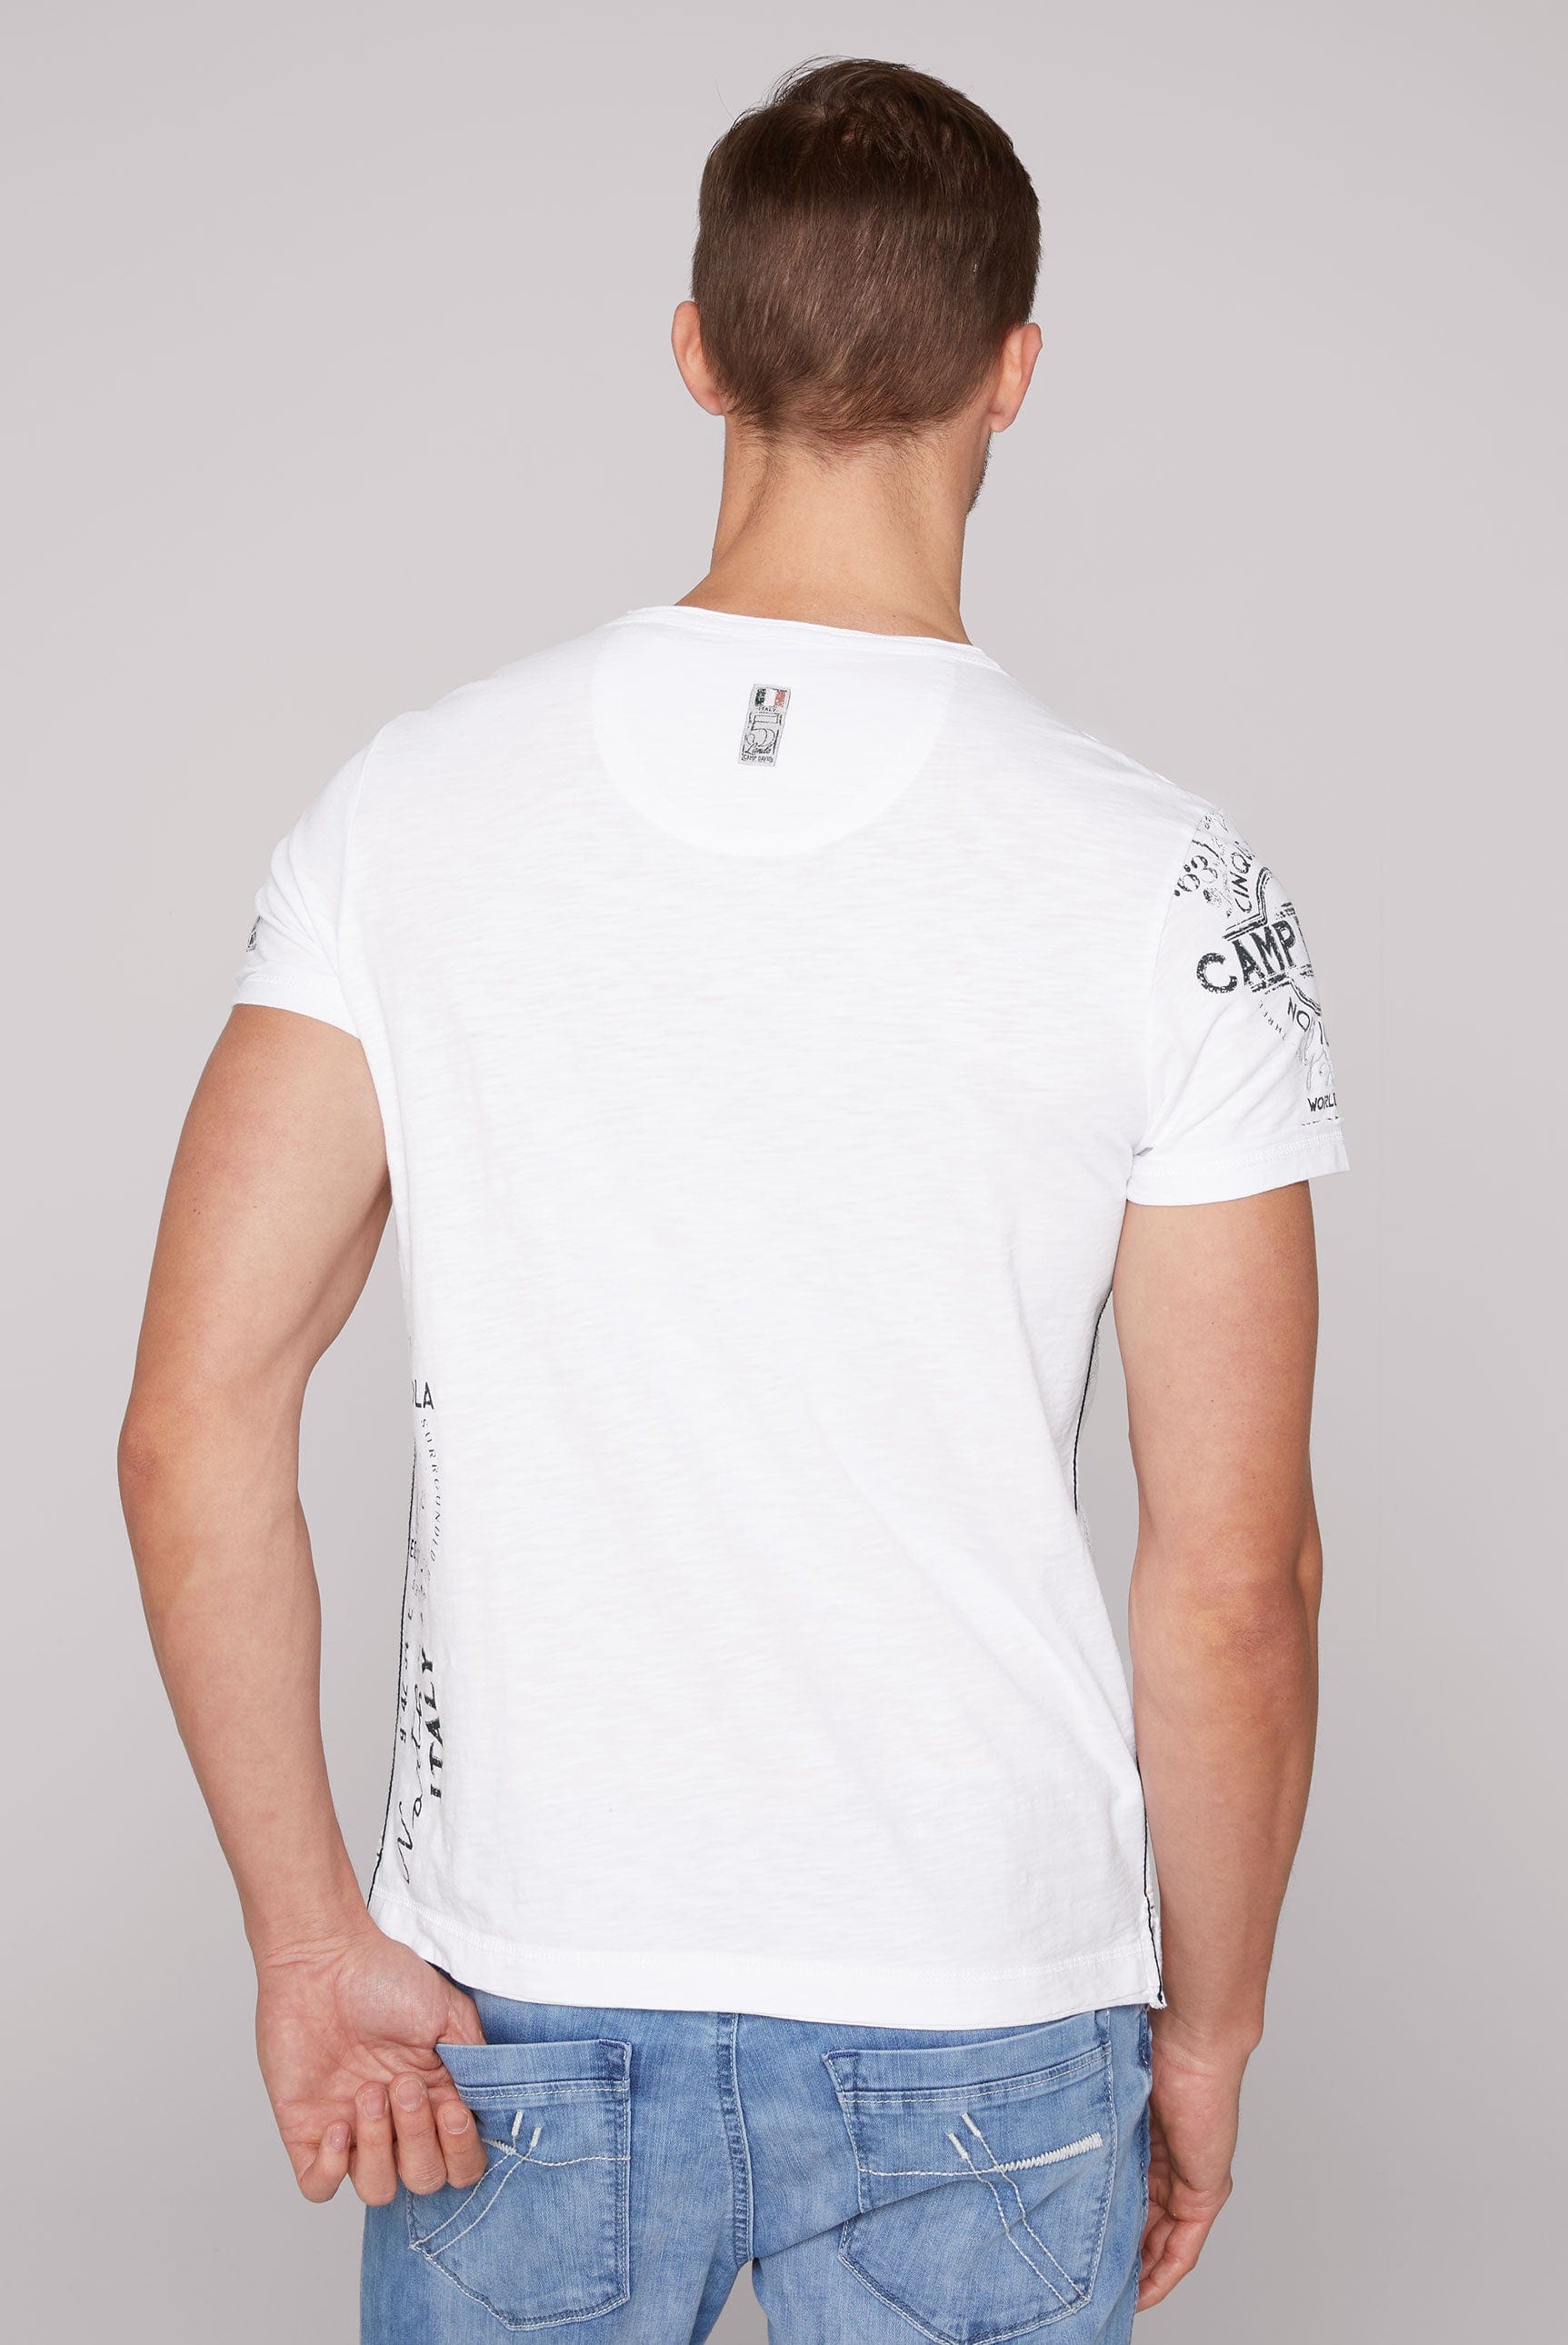 - T-Shirt, Chique Stateshop Terre, optic Camp button white David Fashion v-neck